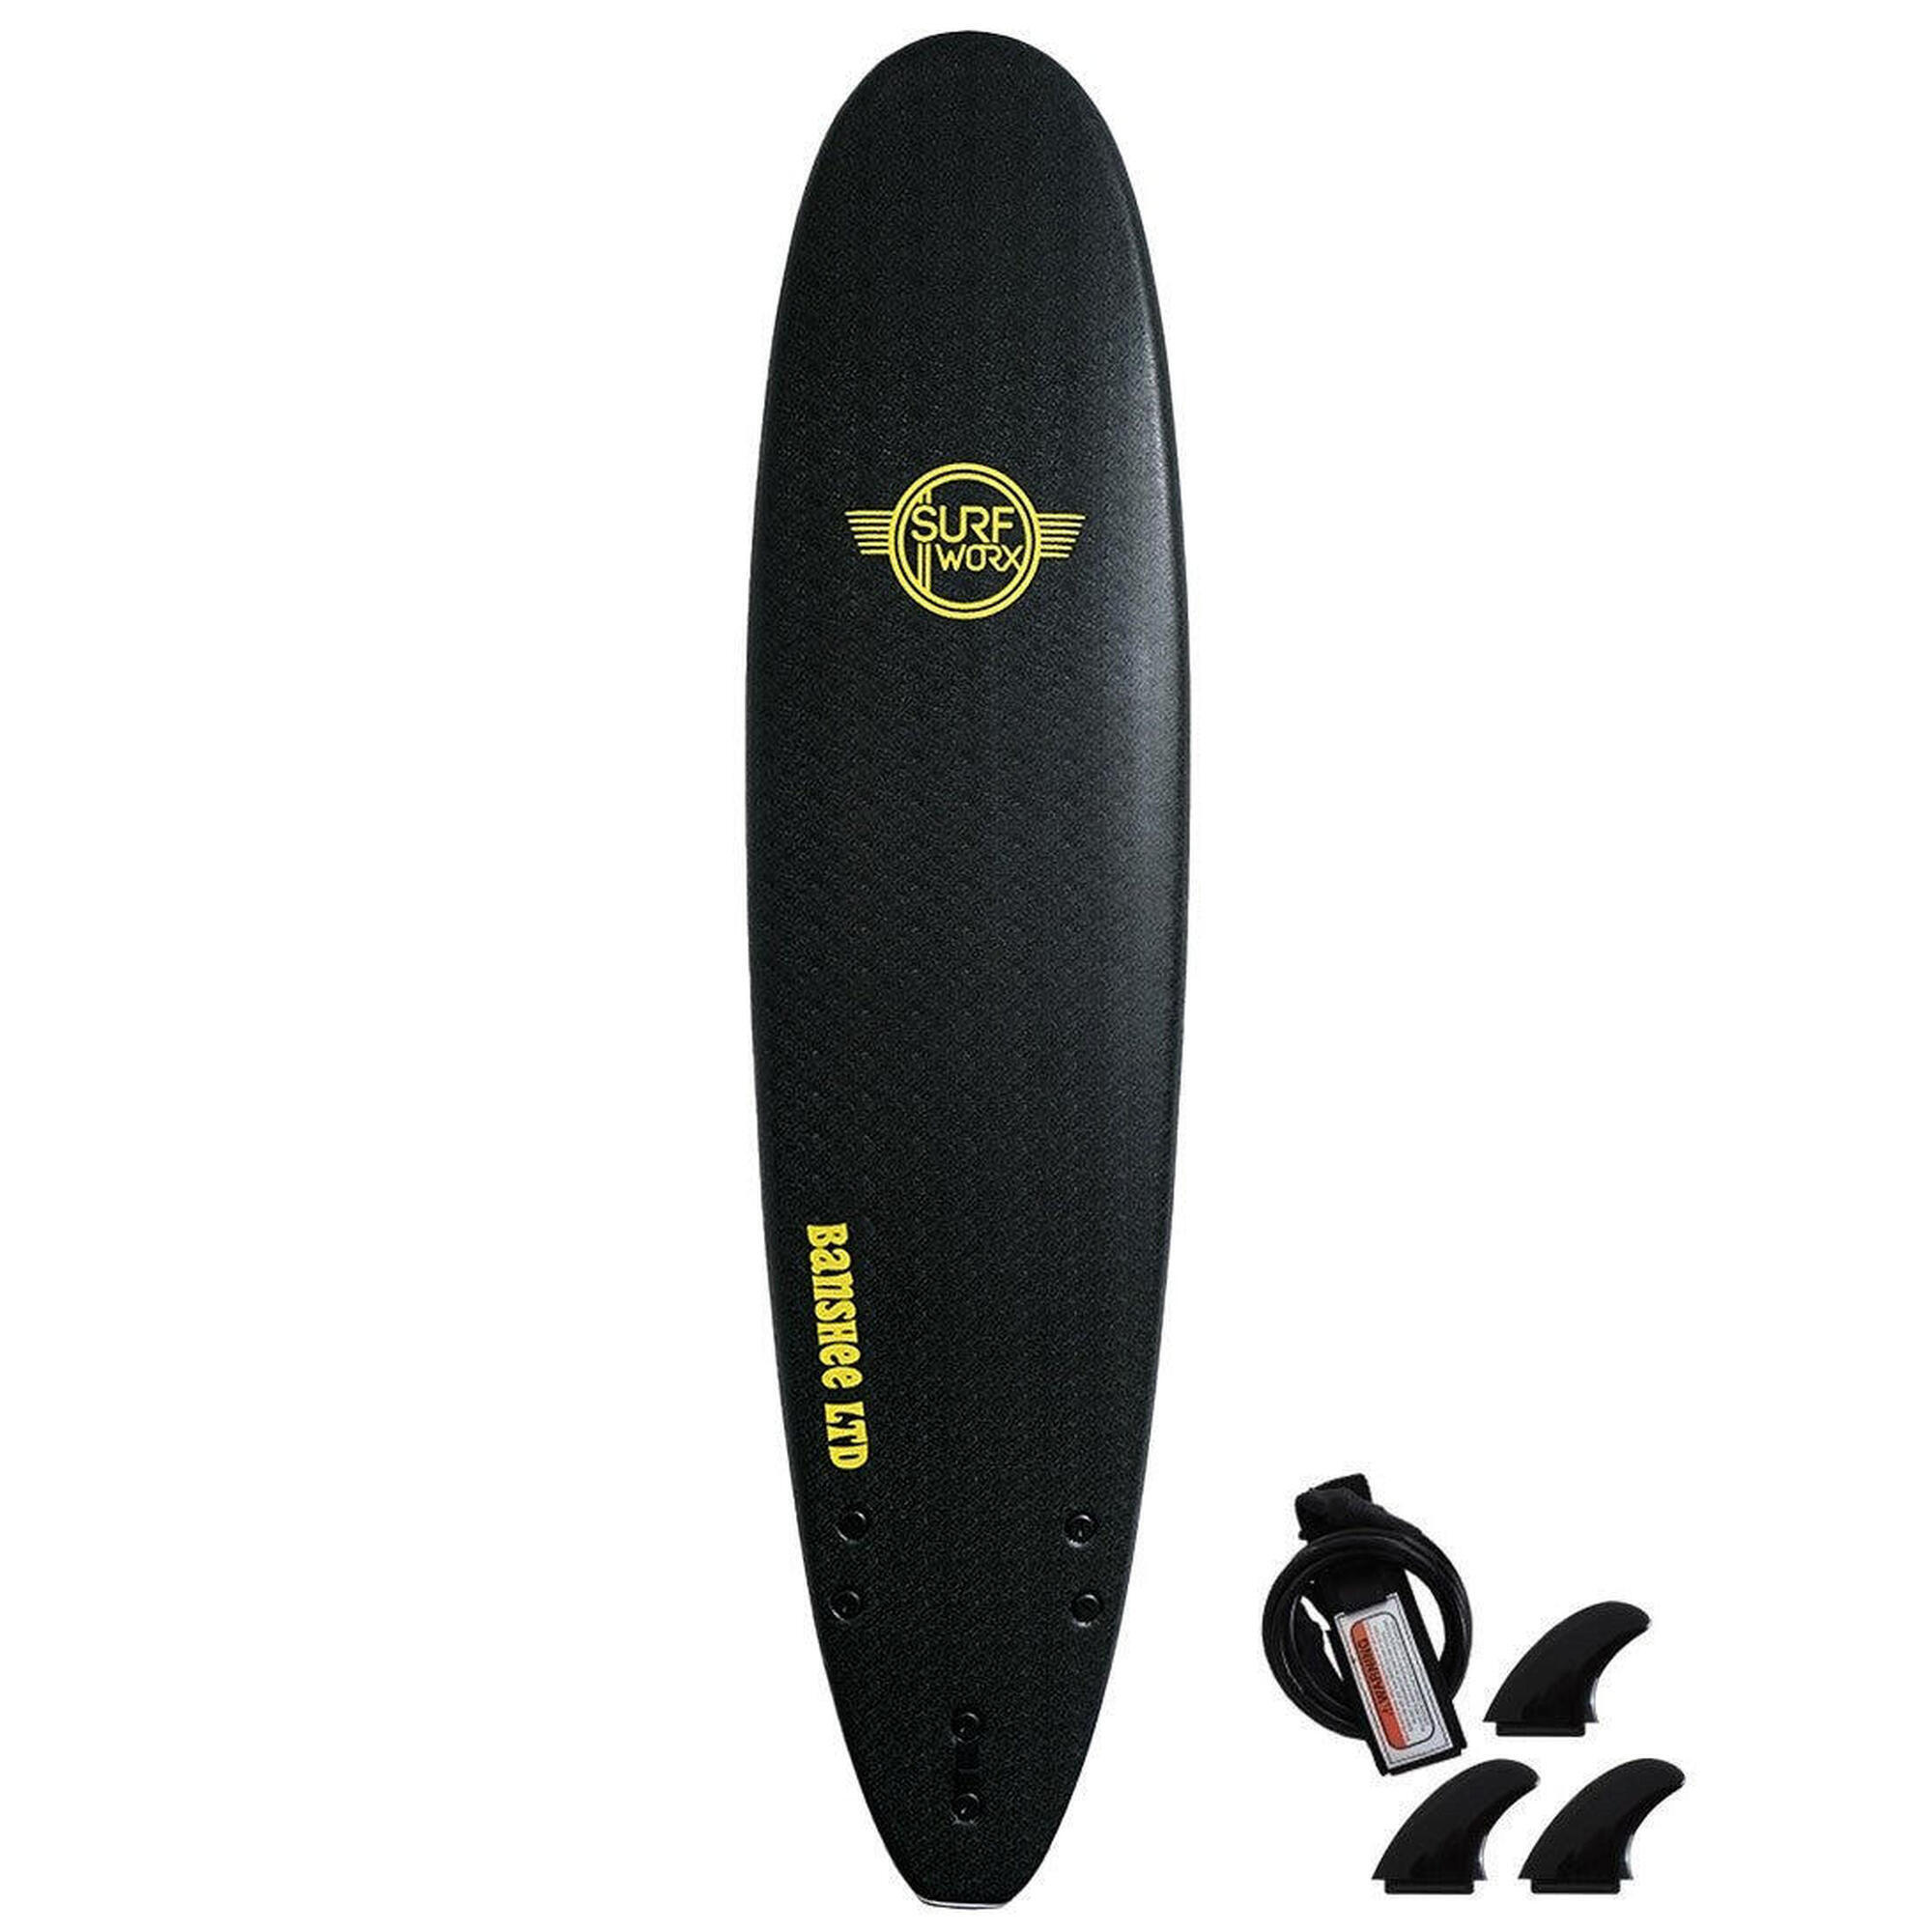 SURFWORX Surfworx Banshee Mini Mal Soft Surfboard Limited Edition 7ft 6 Black